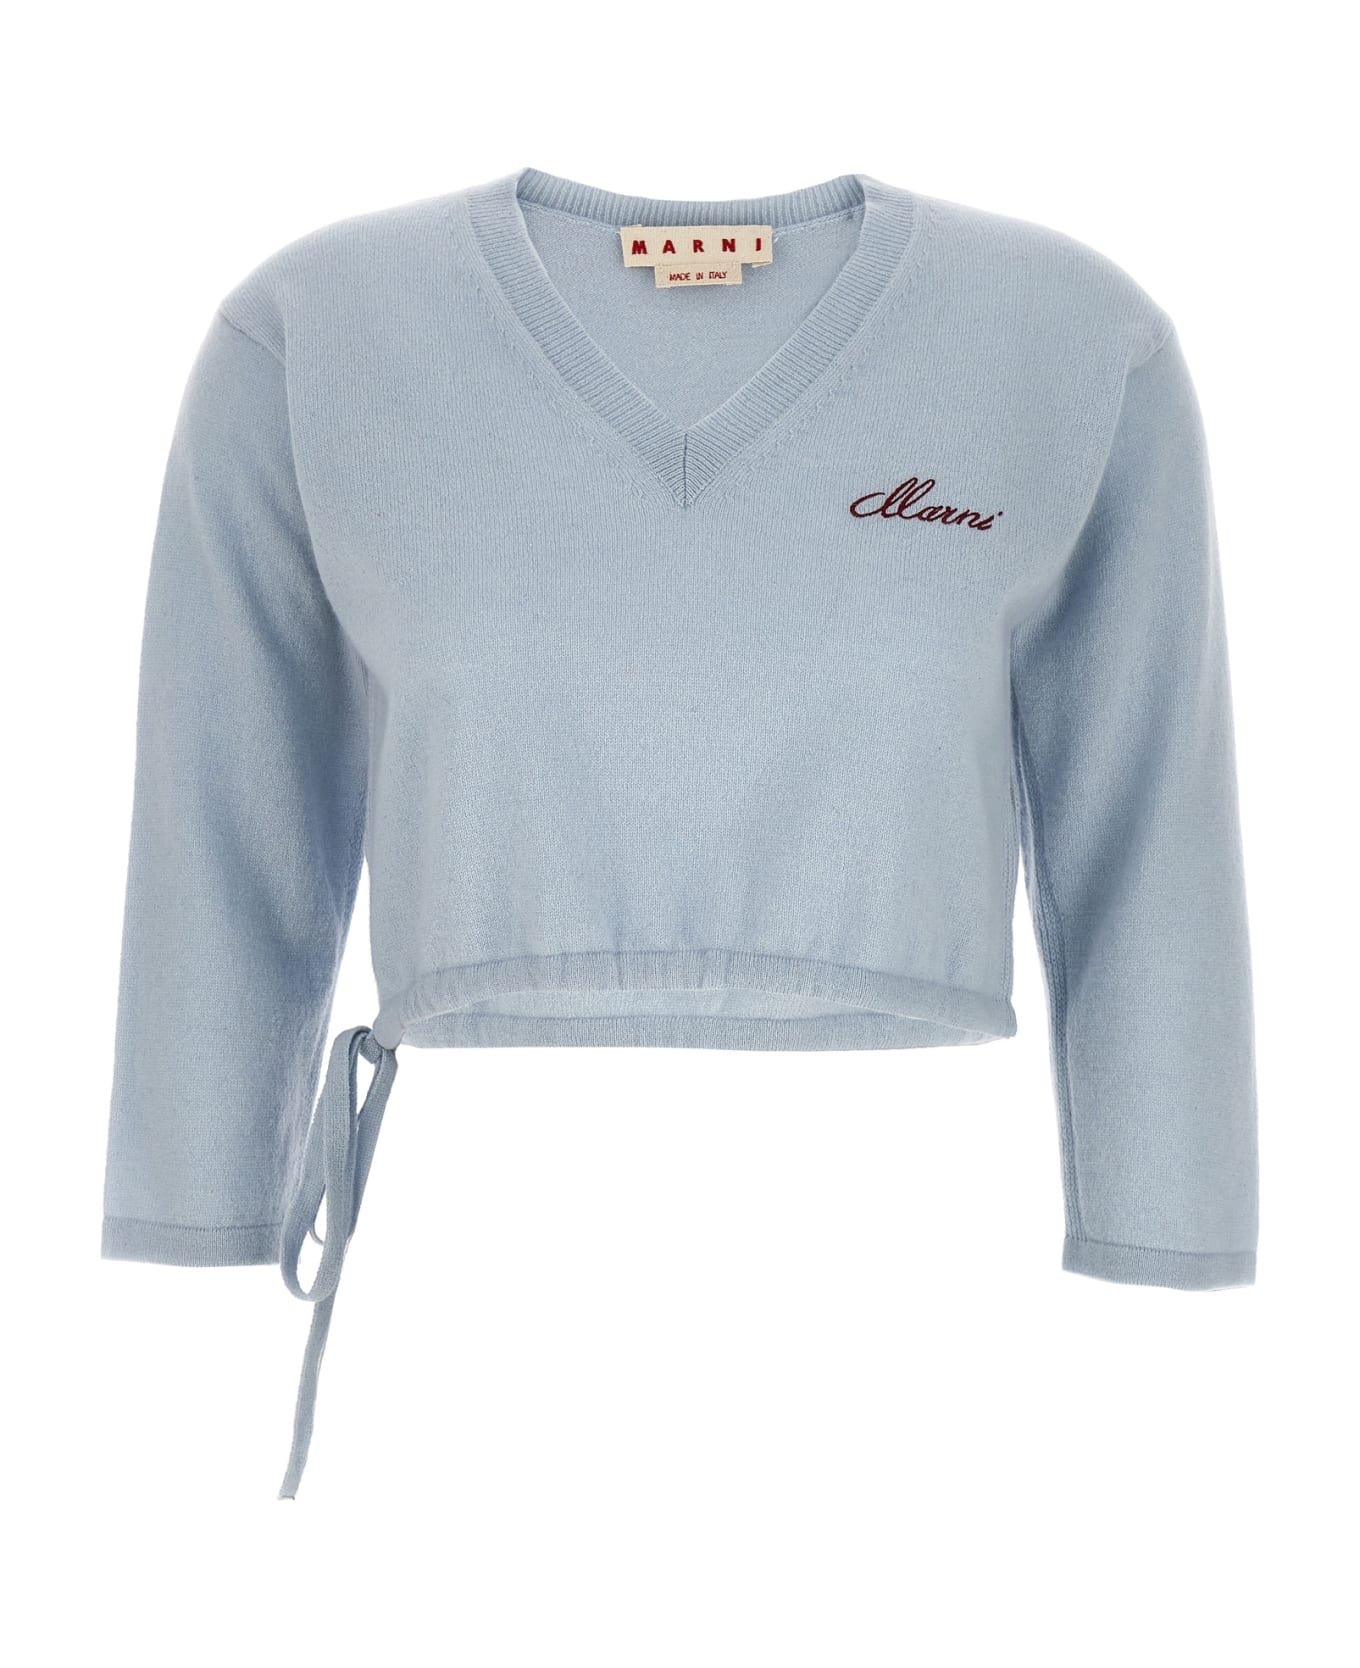 Marni Logo Embroidery Sweater - Light Blue